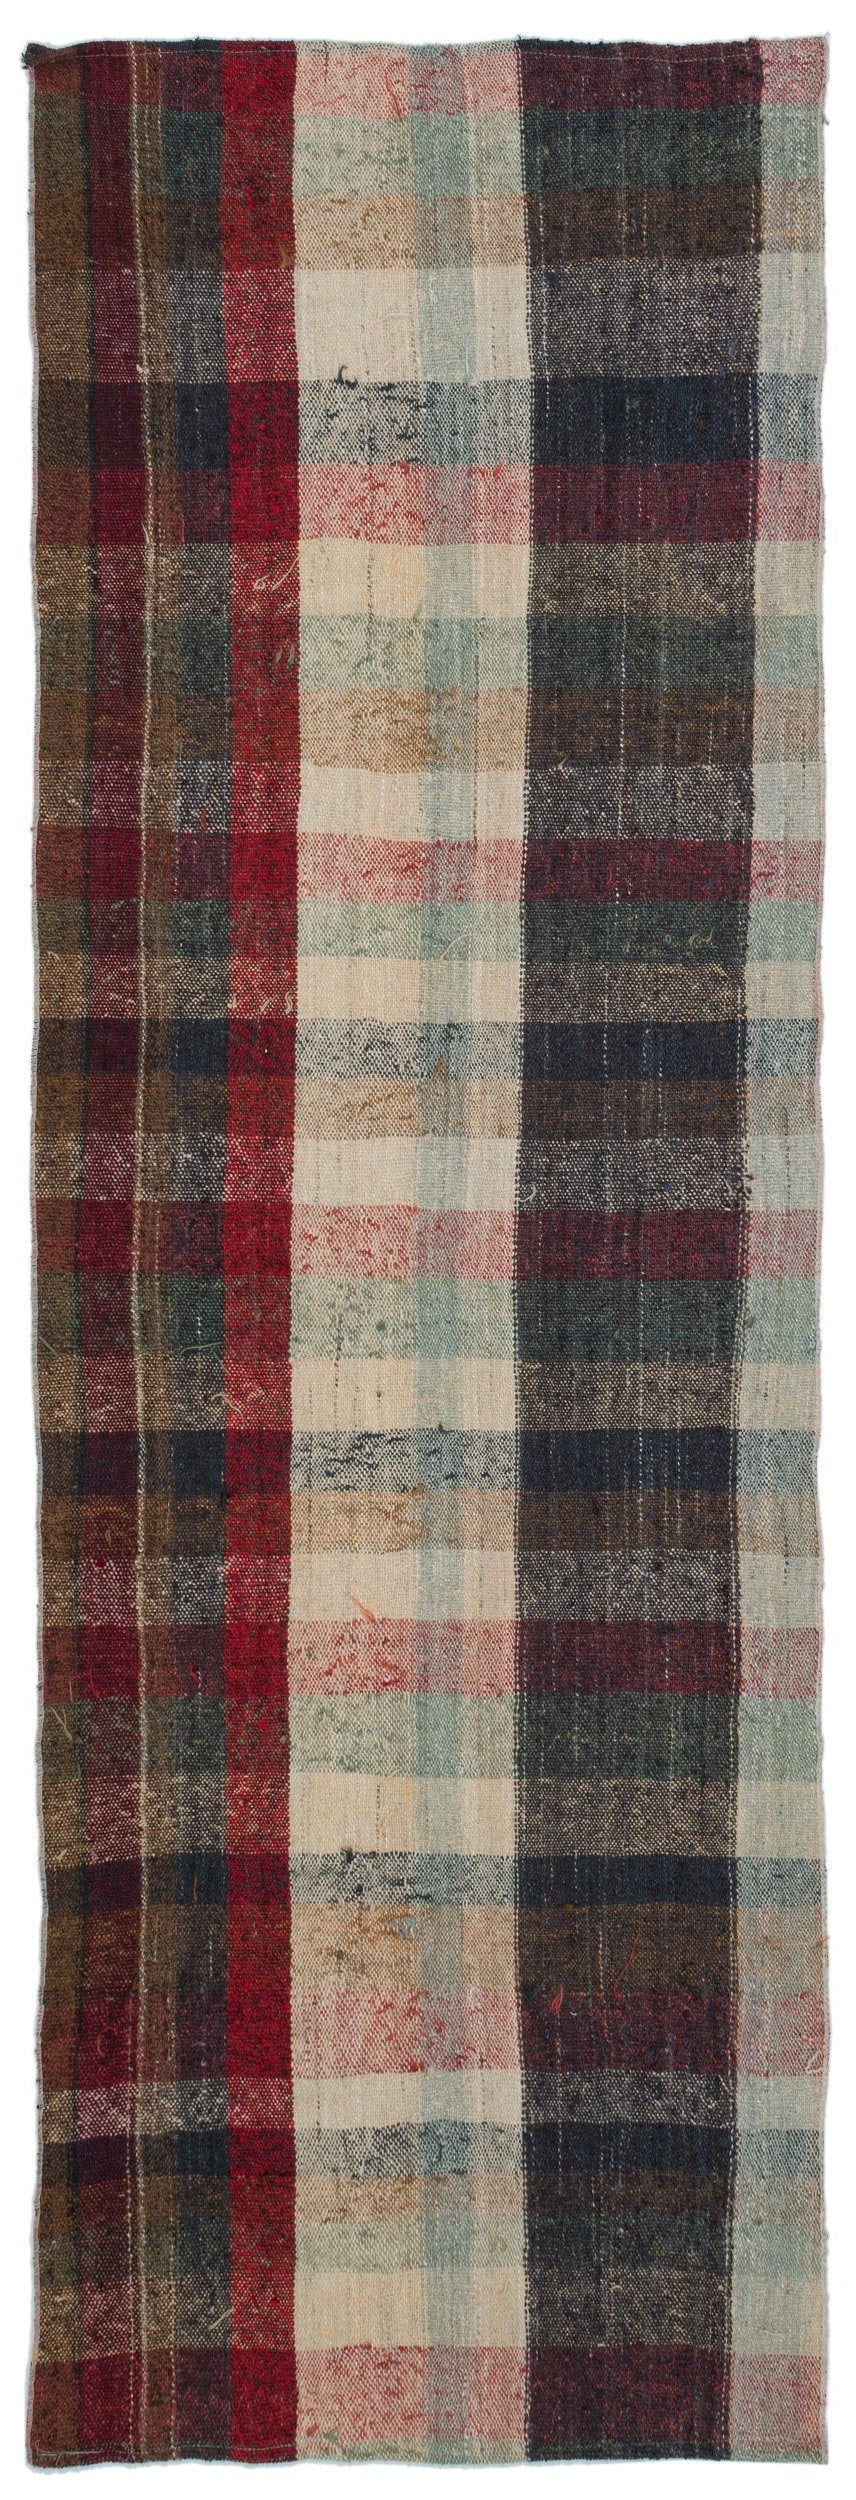 Crete Multi Striped Wool Hand Woven Carpet 100 x 295